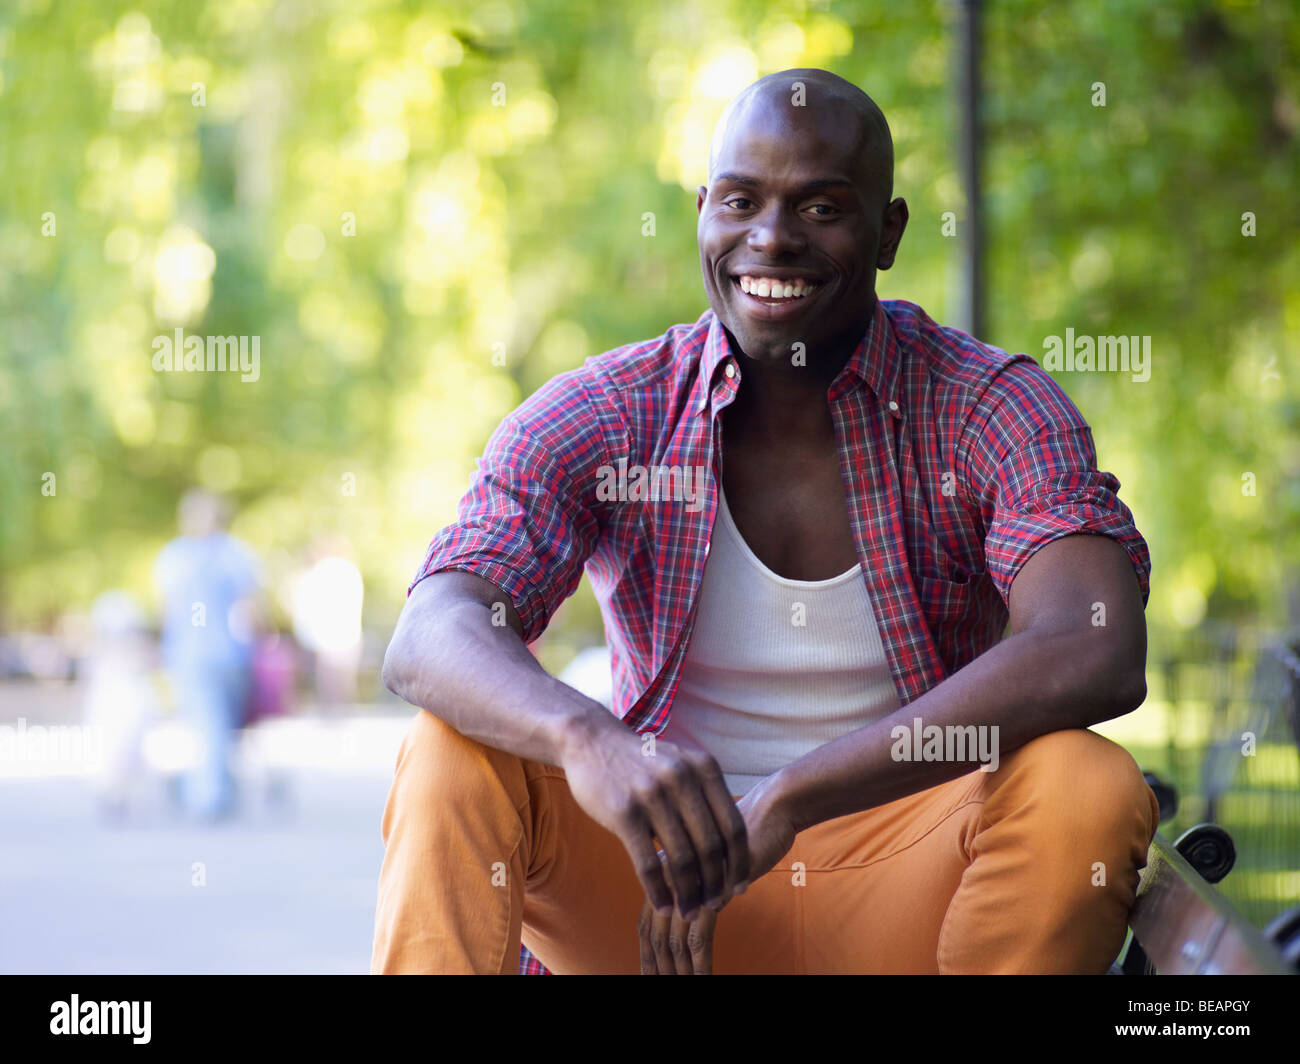 African man smiling Stock Photo